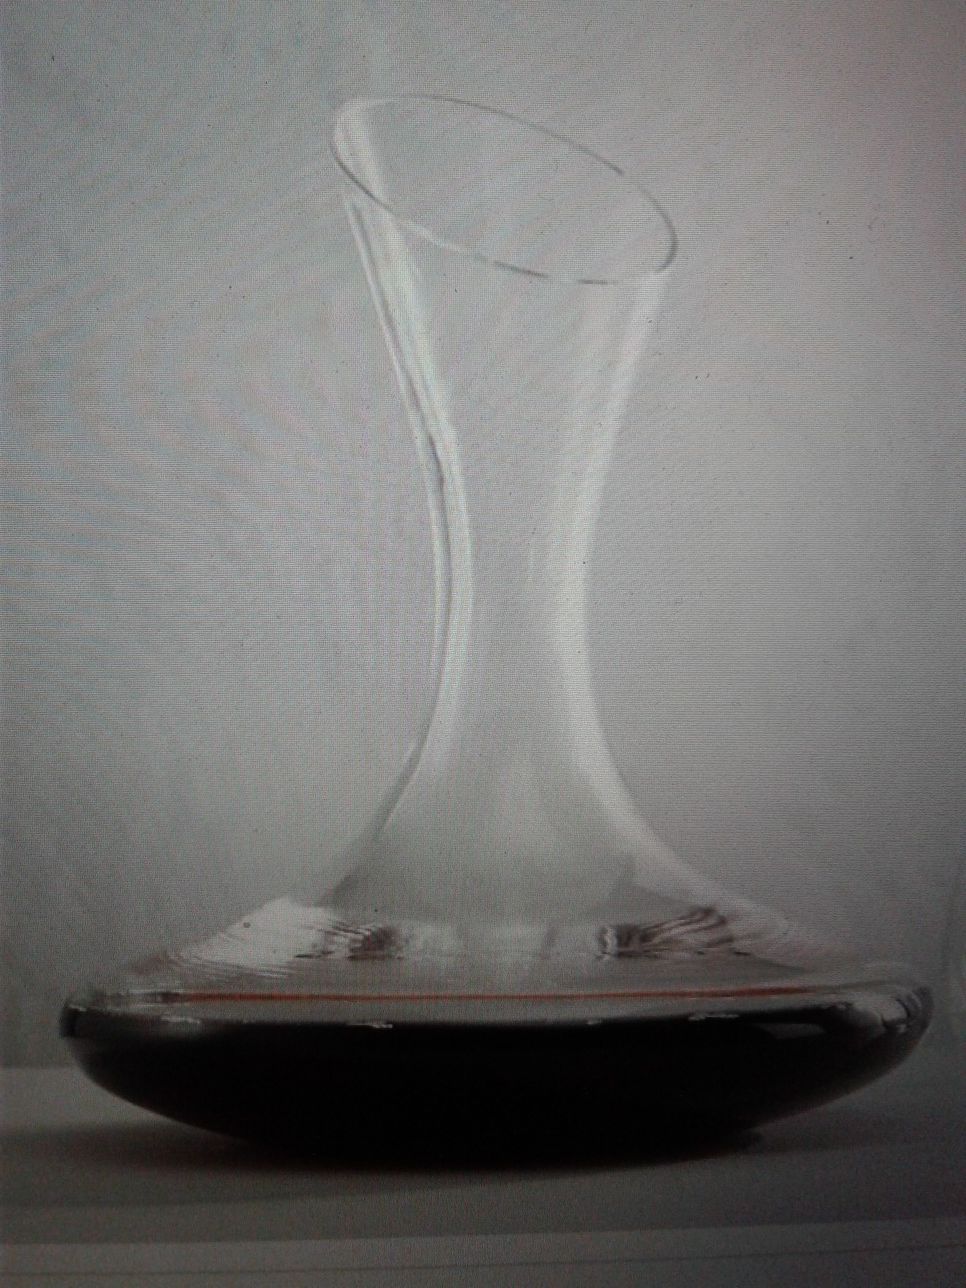 Pottery Barn Vino hand blown glass wine decanter. Wine carafe